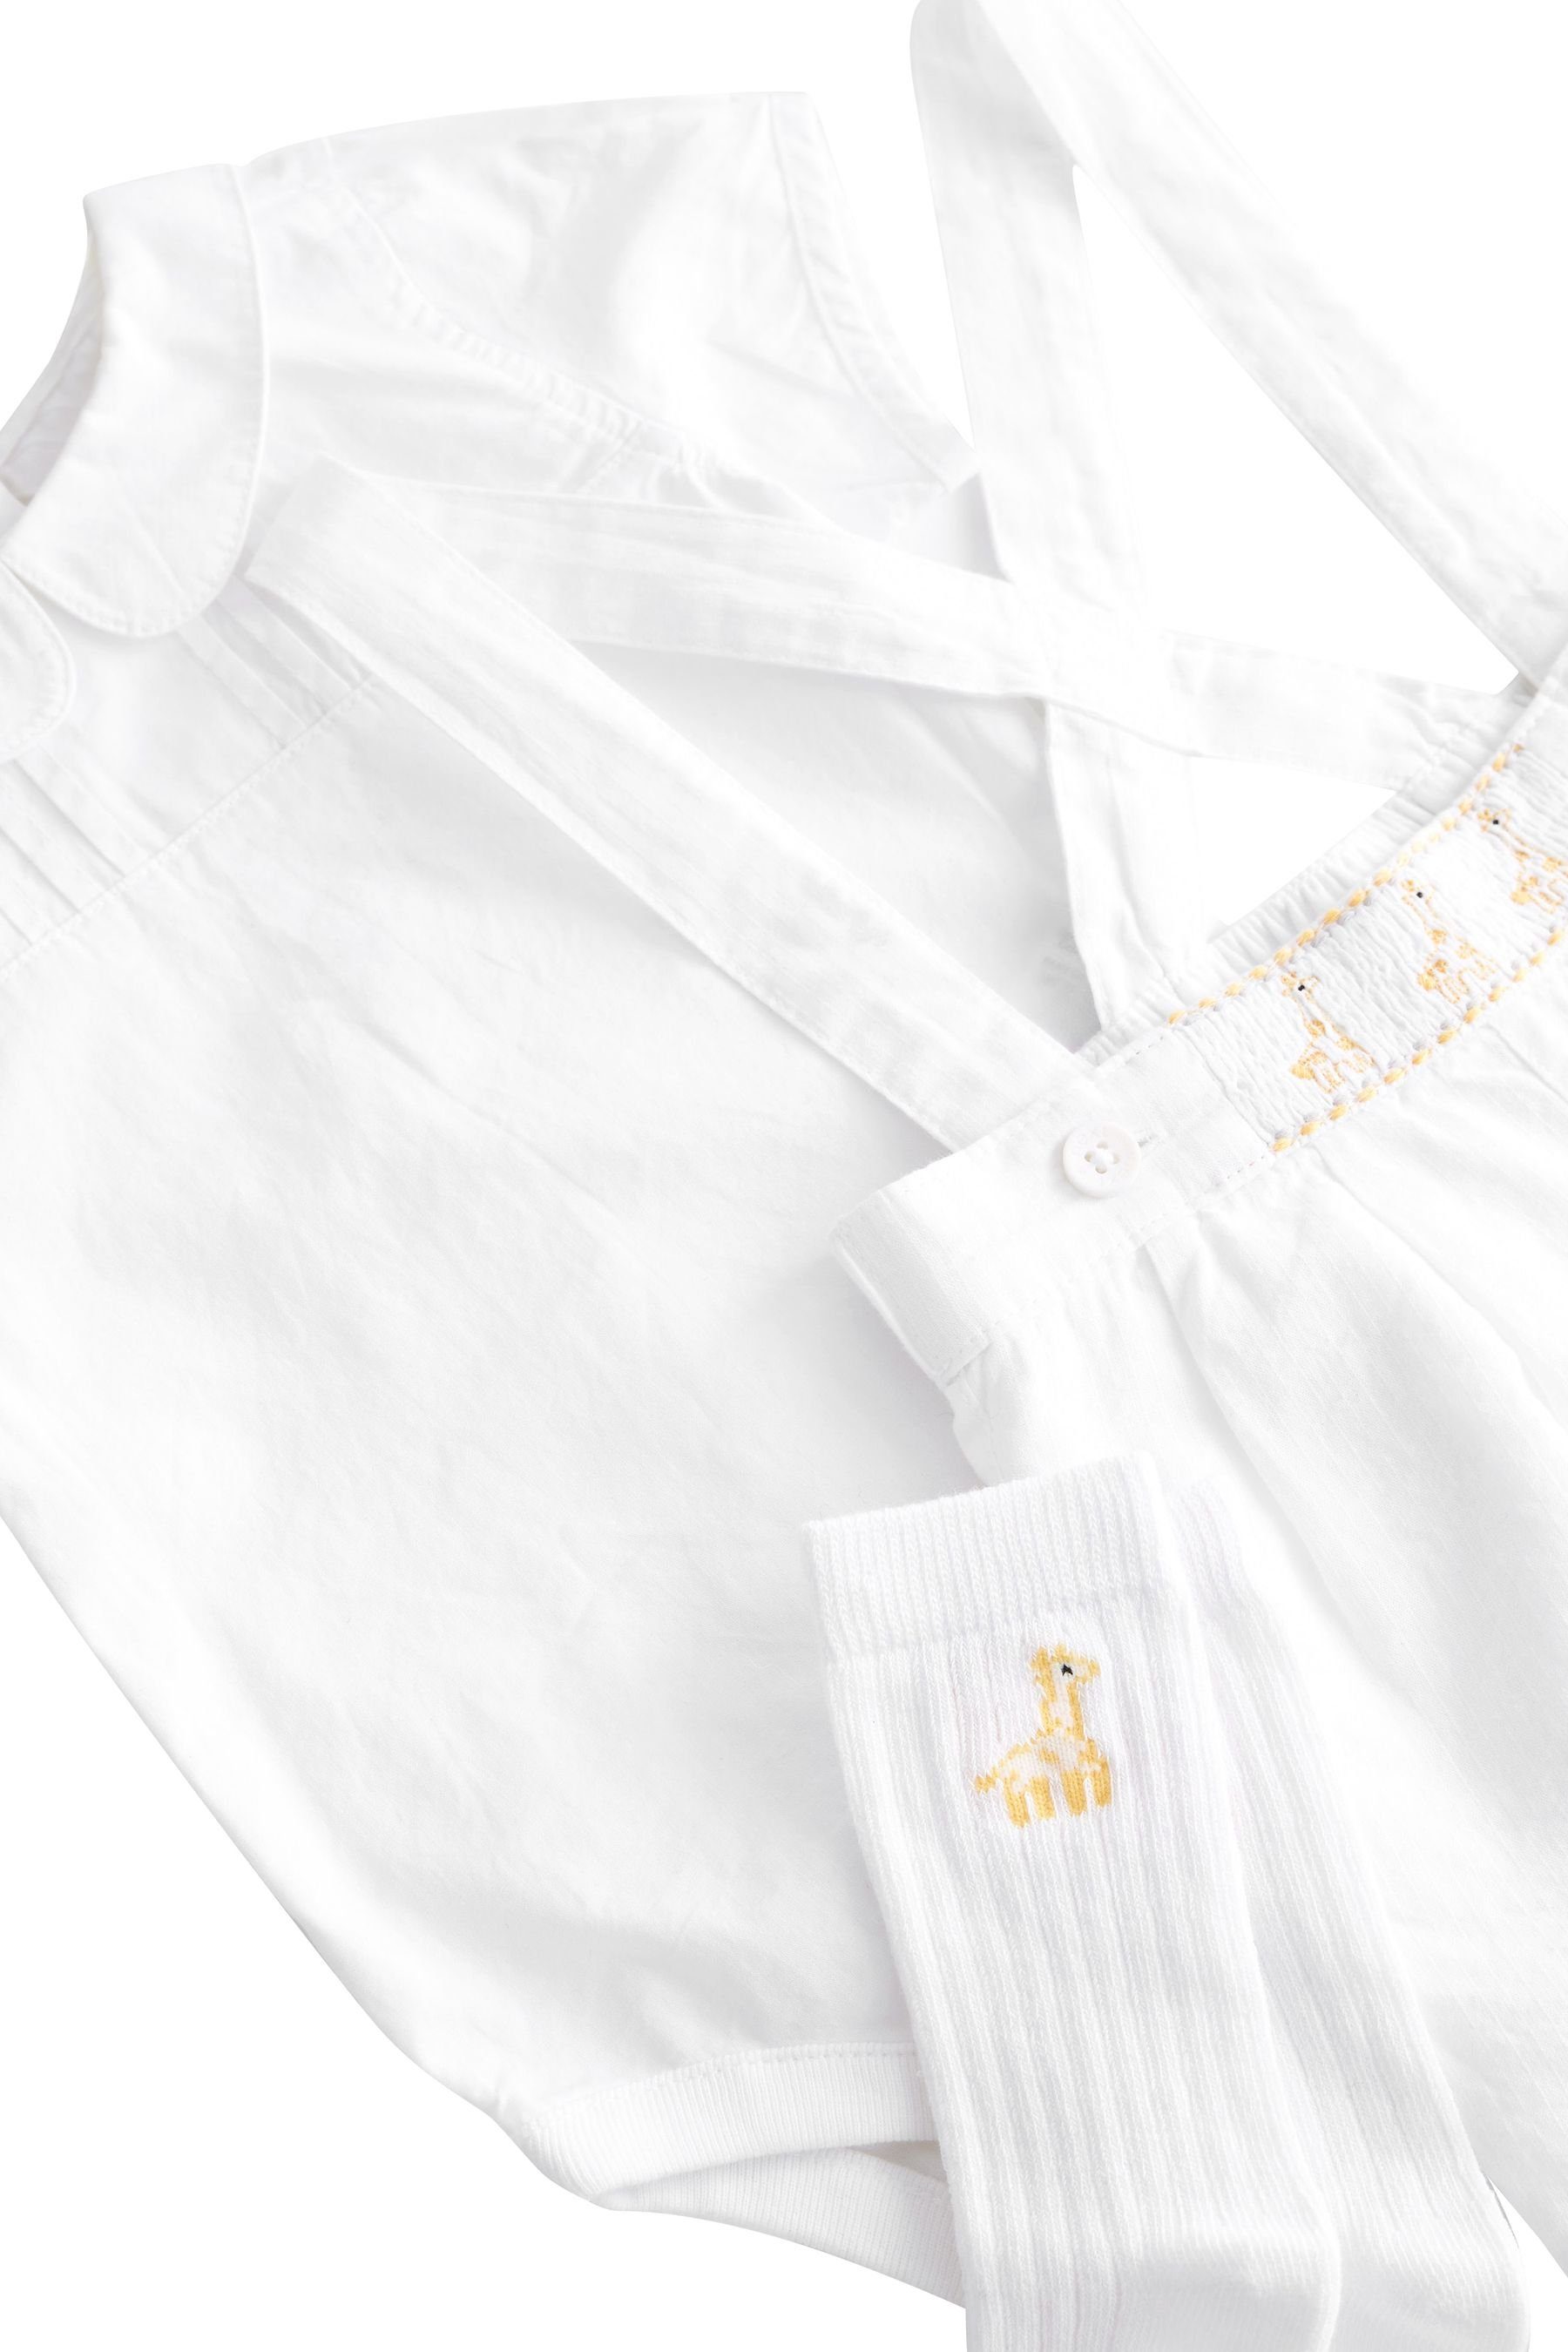 Next Hemd & Hose White kurzer elegantem (3-tlg) Socken Babyset mit Hemd, und Hose